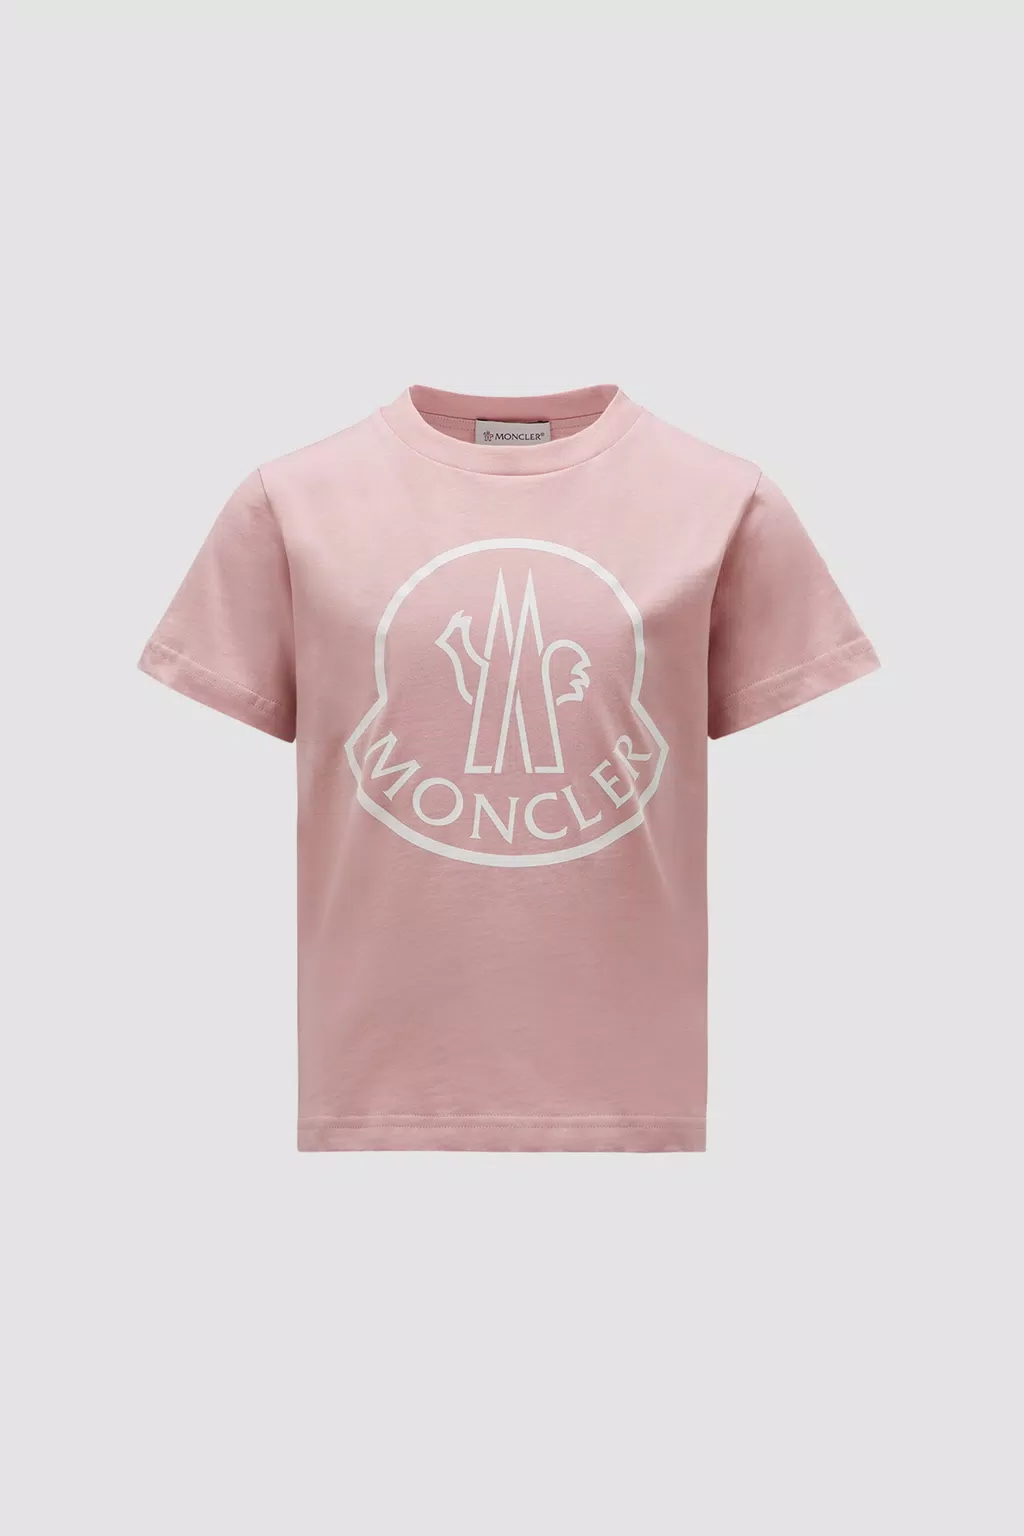 Tシャツ ジェンダーニュートラル ピンク Moncler 1